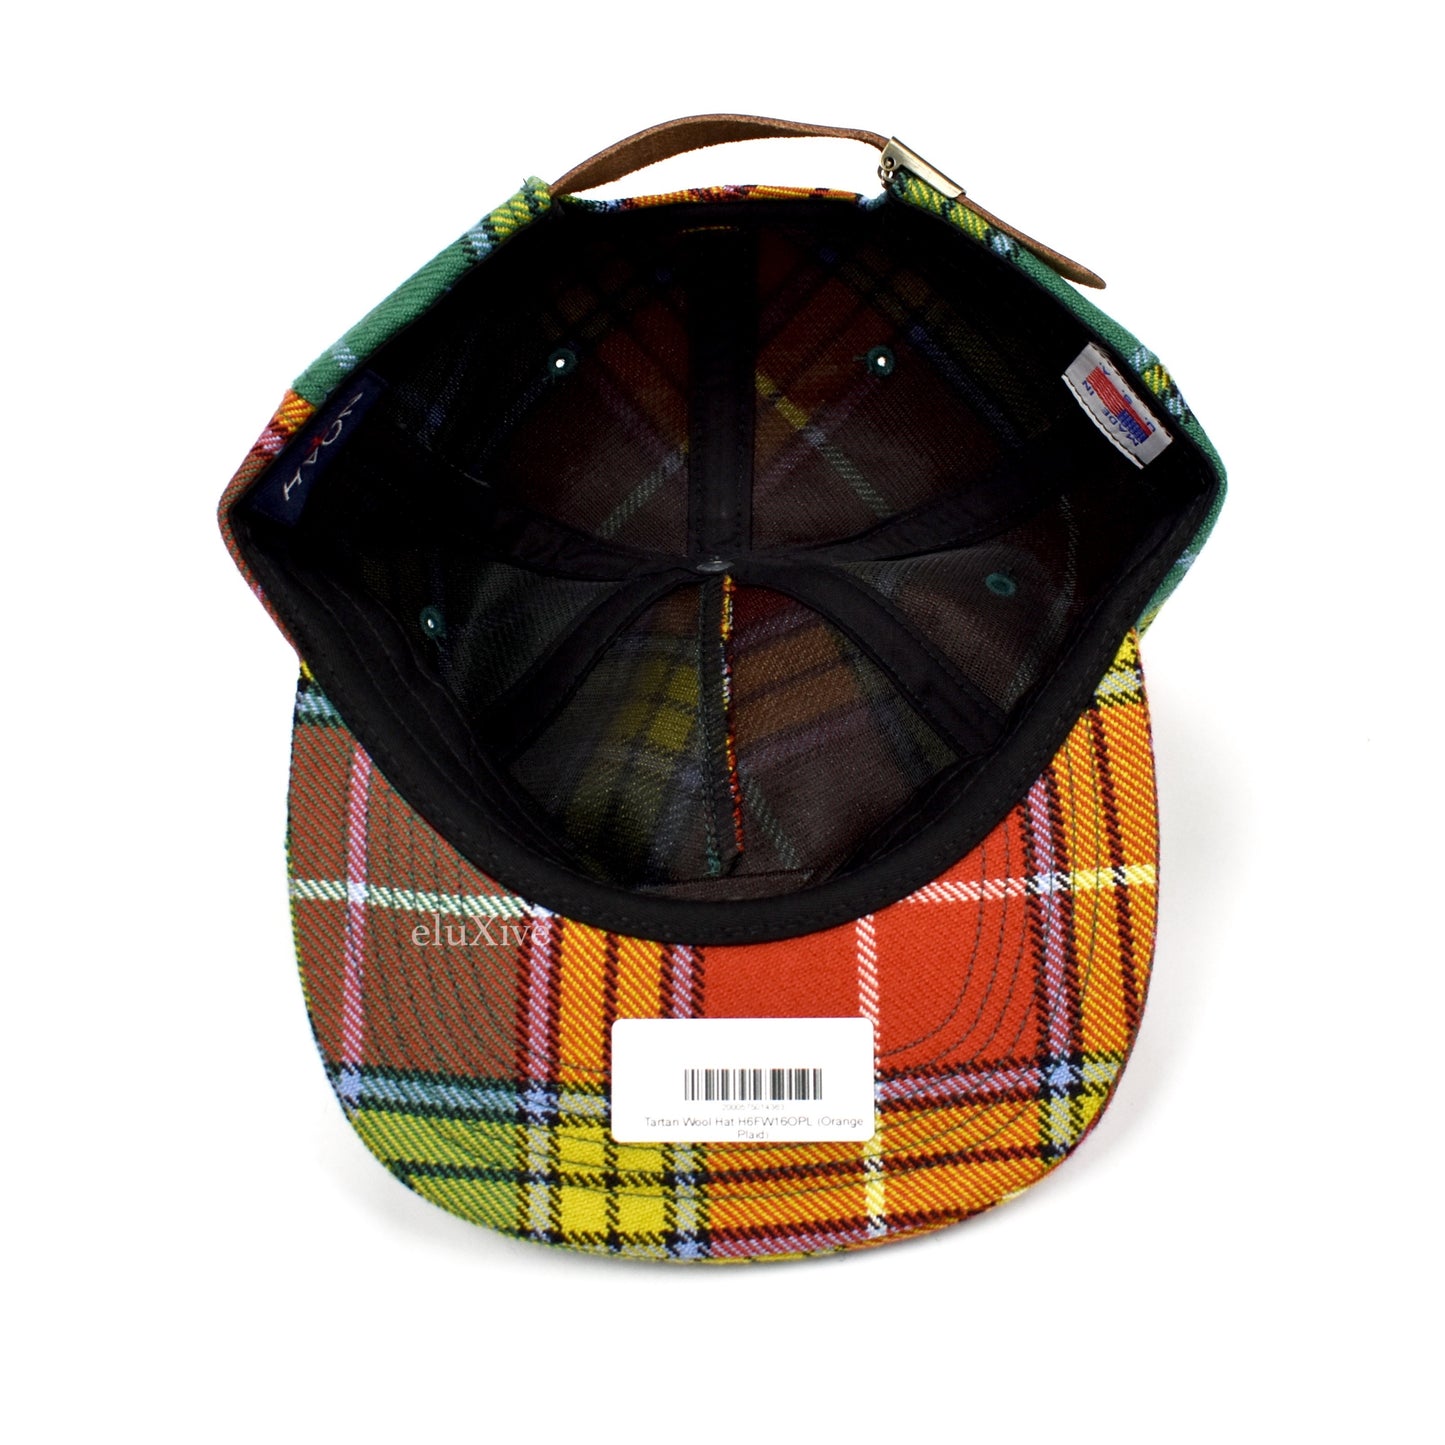 Noah - Tartan Wool Core Logo Hat (Multicolor Plaid)